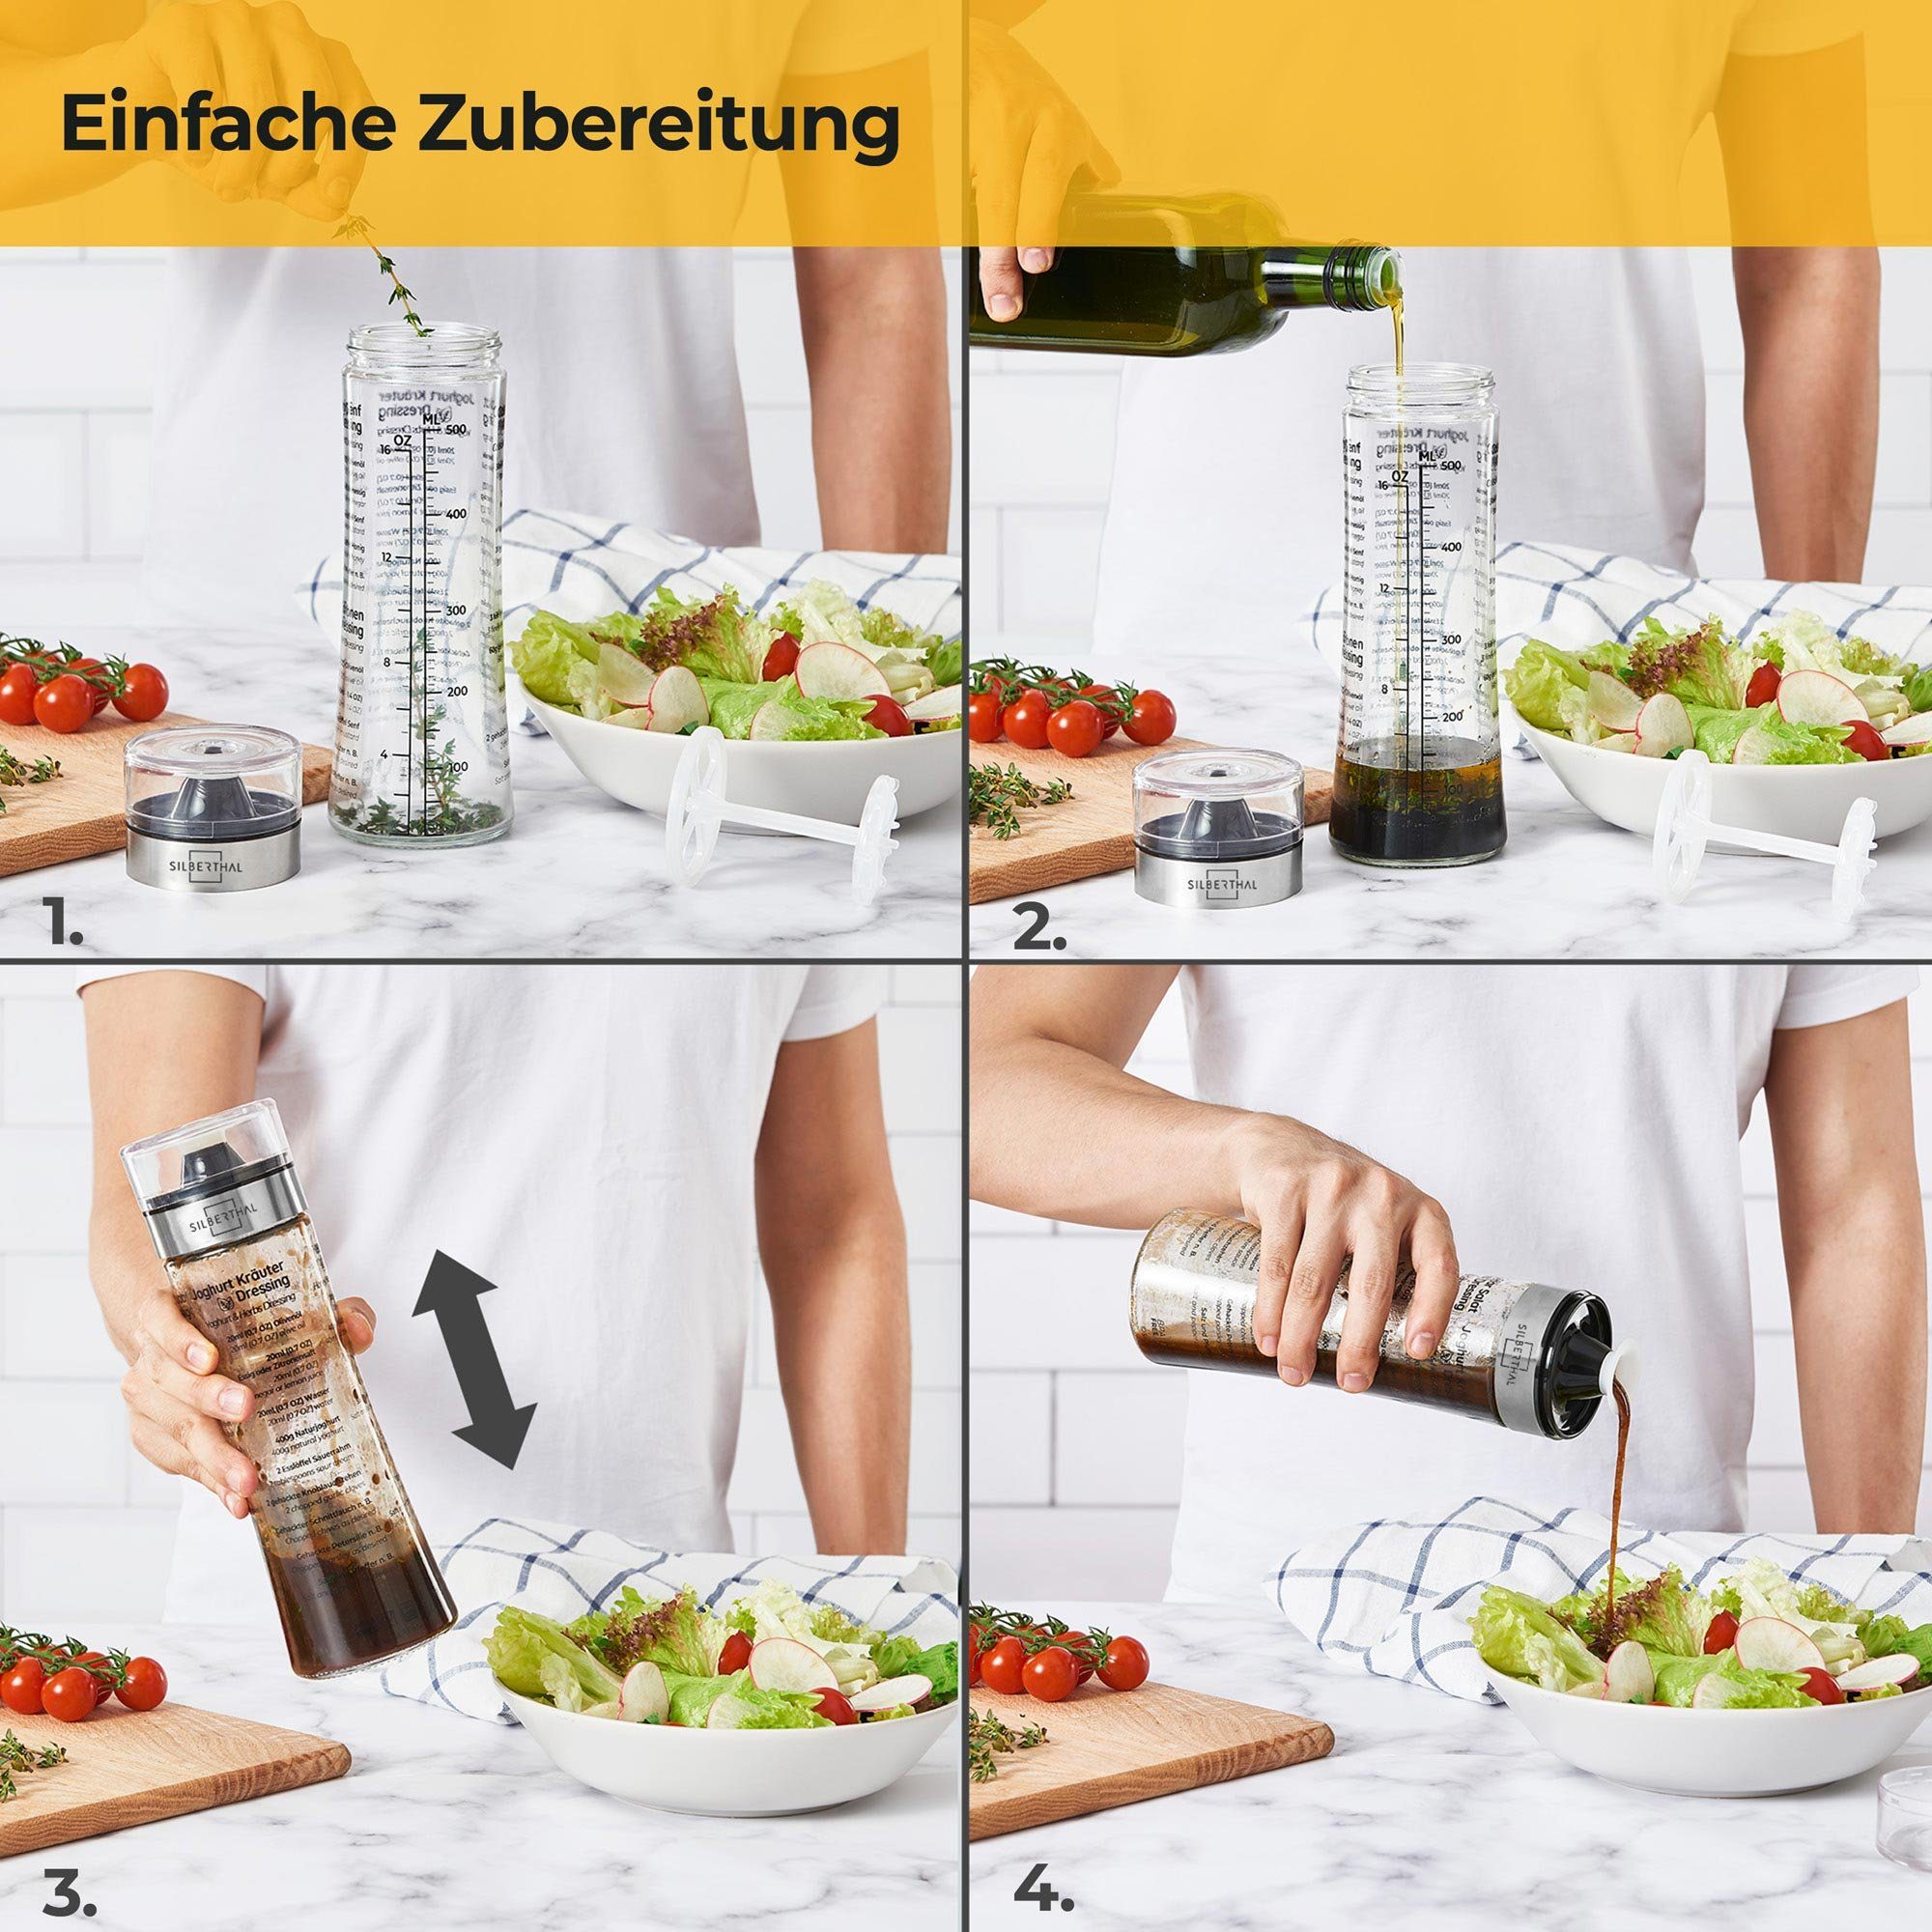 mit Glas, SILBERTHAL Salatdressing integrierter zum Dressing Shaker Behälter 500ml perfekt Salatsaucen Mitnehmen Rezepten, mit Skala, Shaker